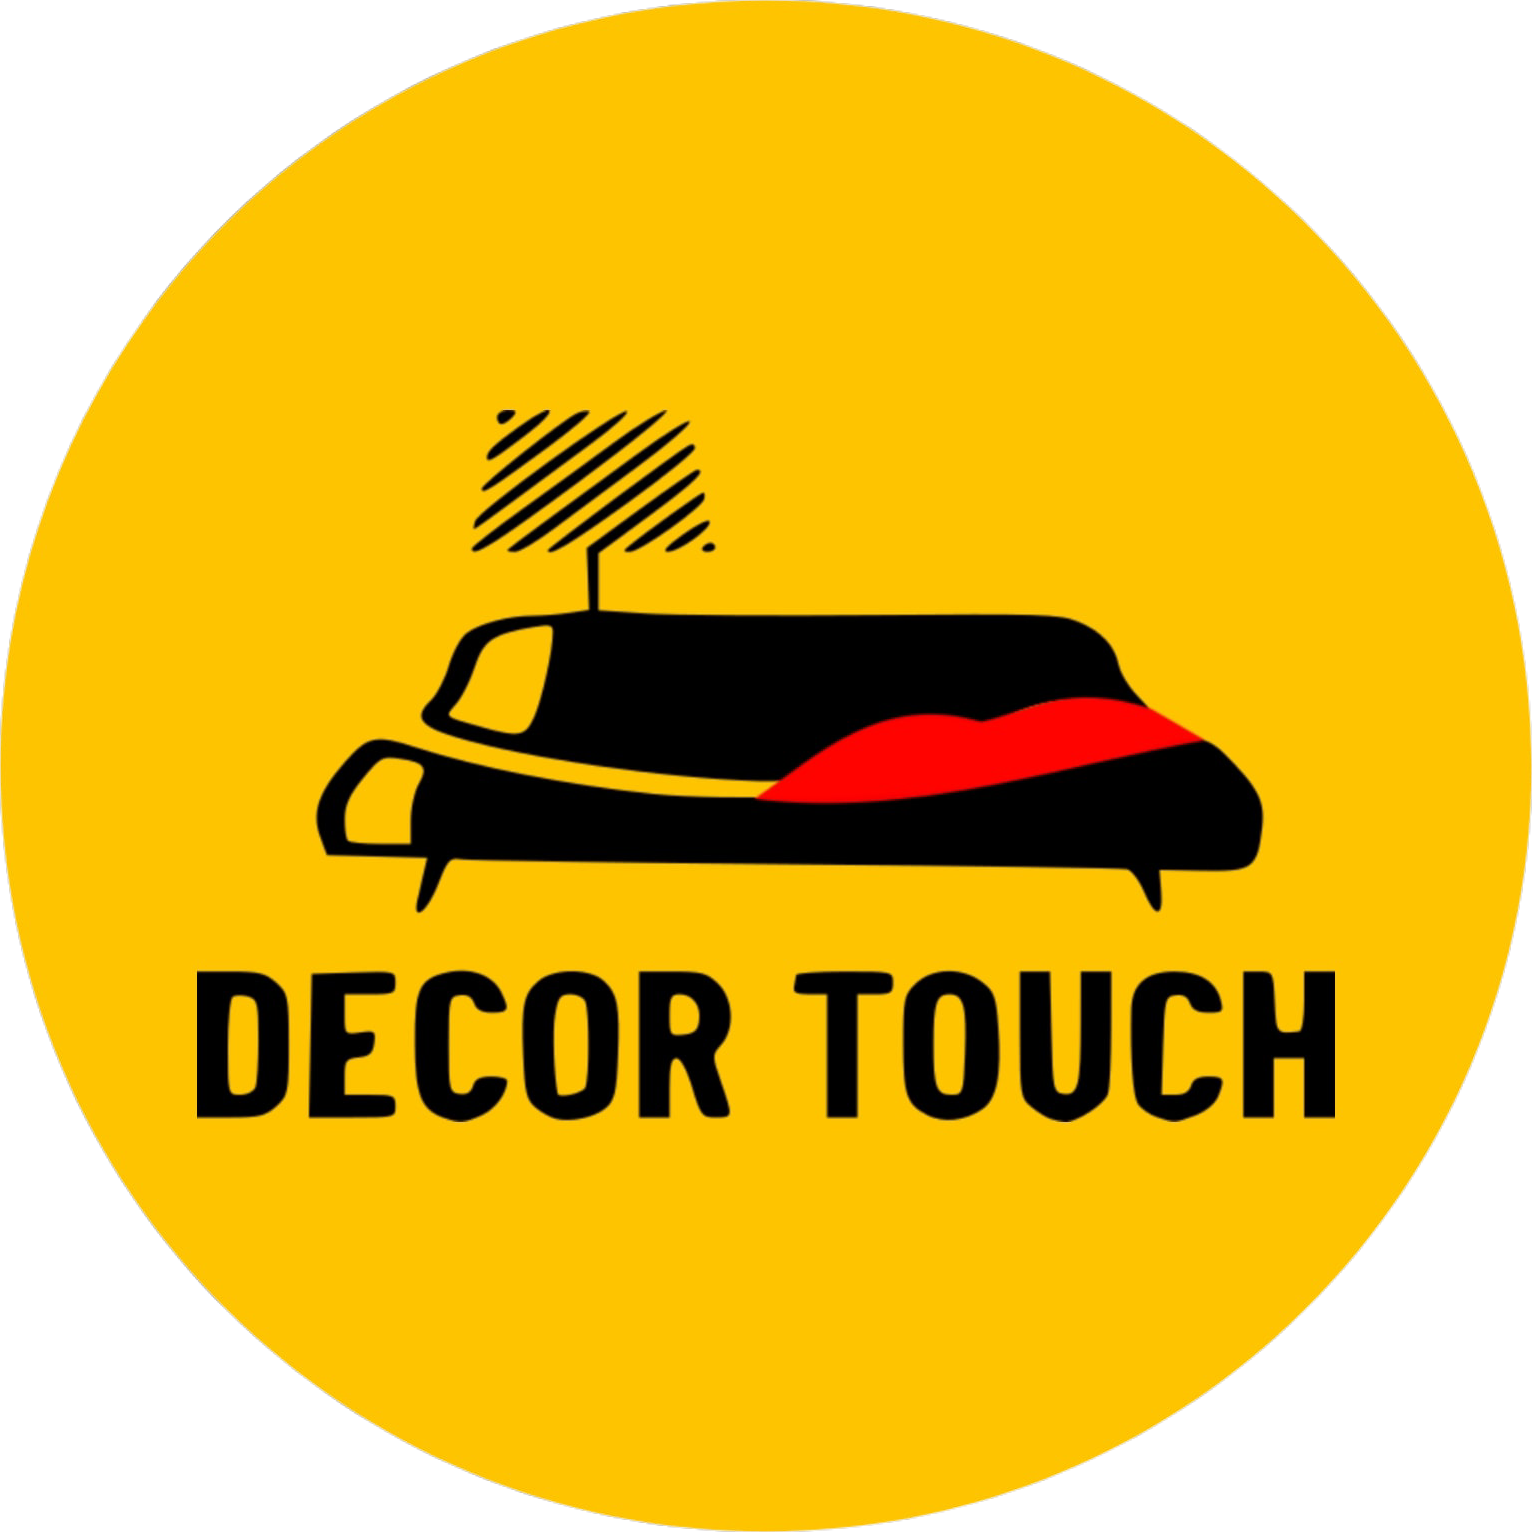 Decor-touch